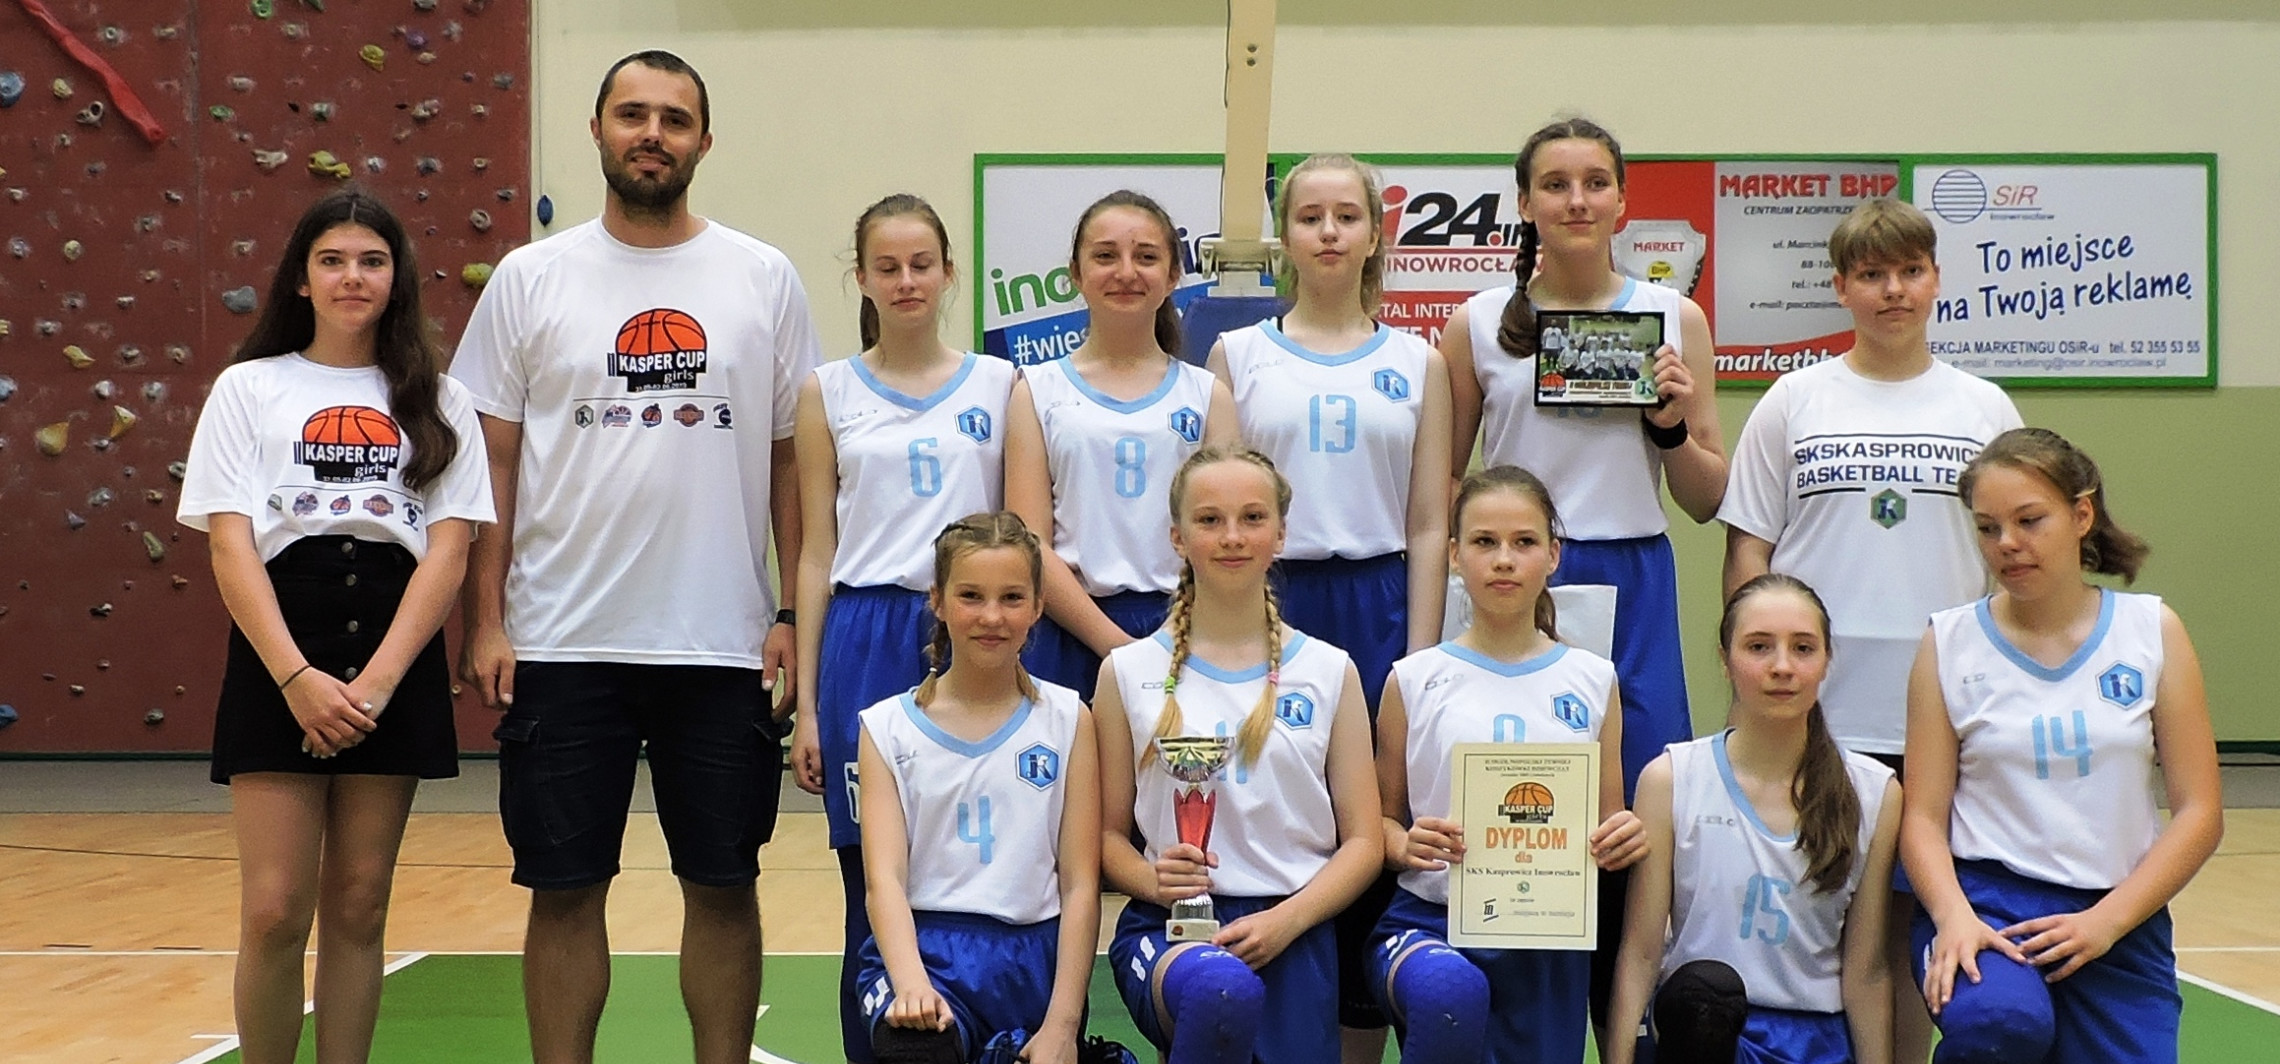 Inowrocław - Kasper Cup Girls 2019 za nami